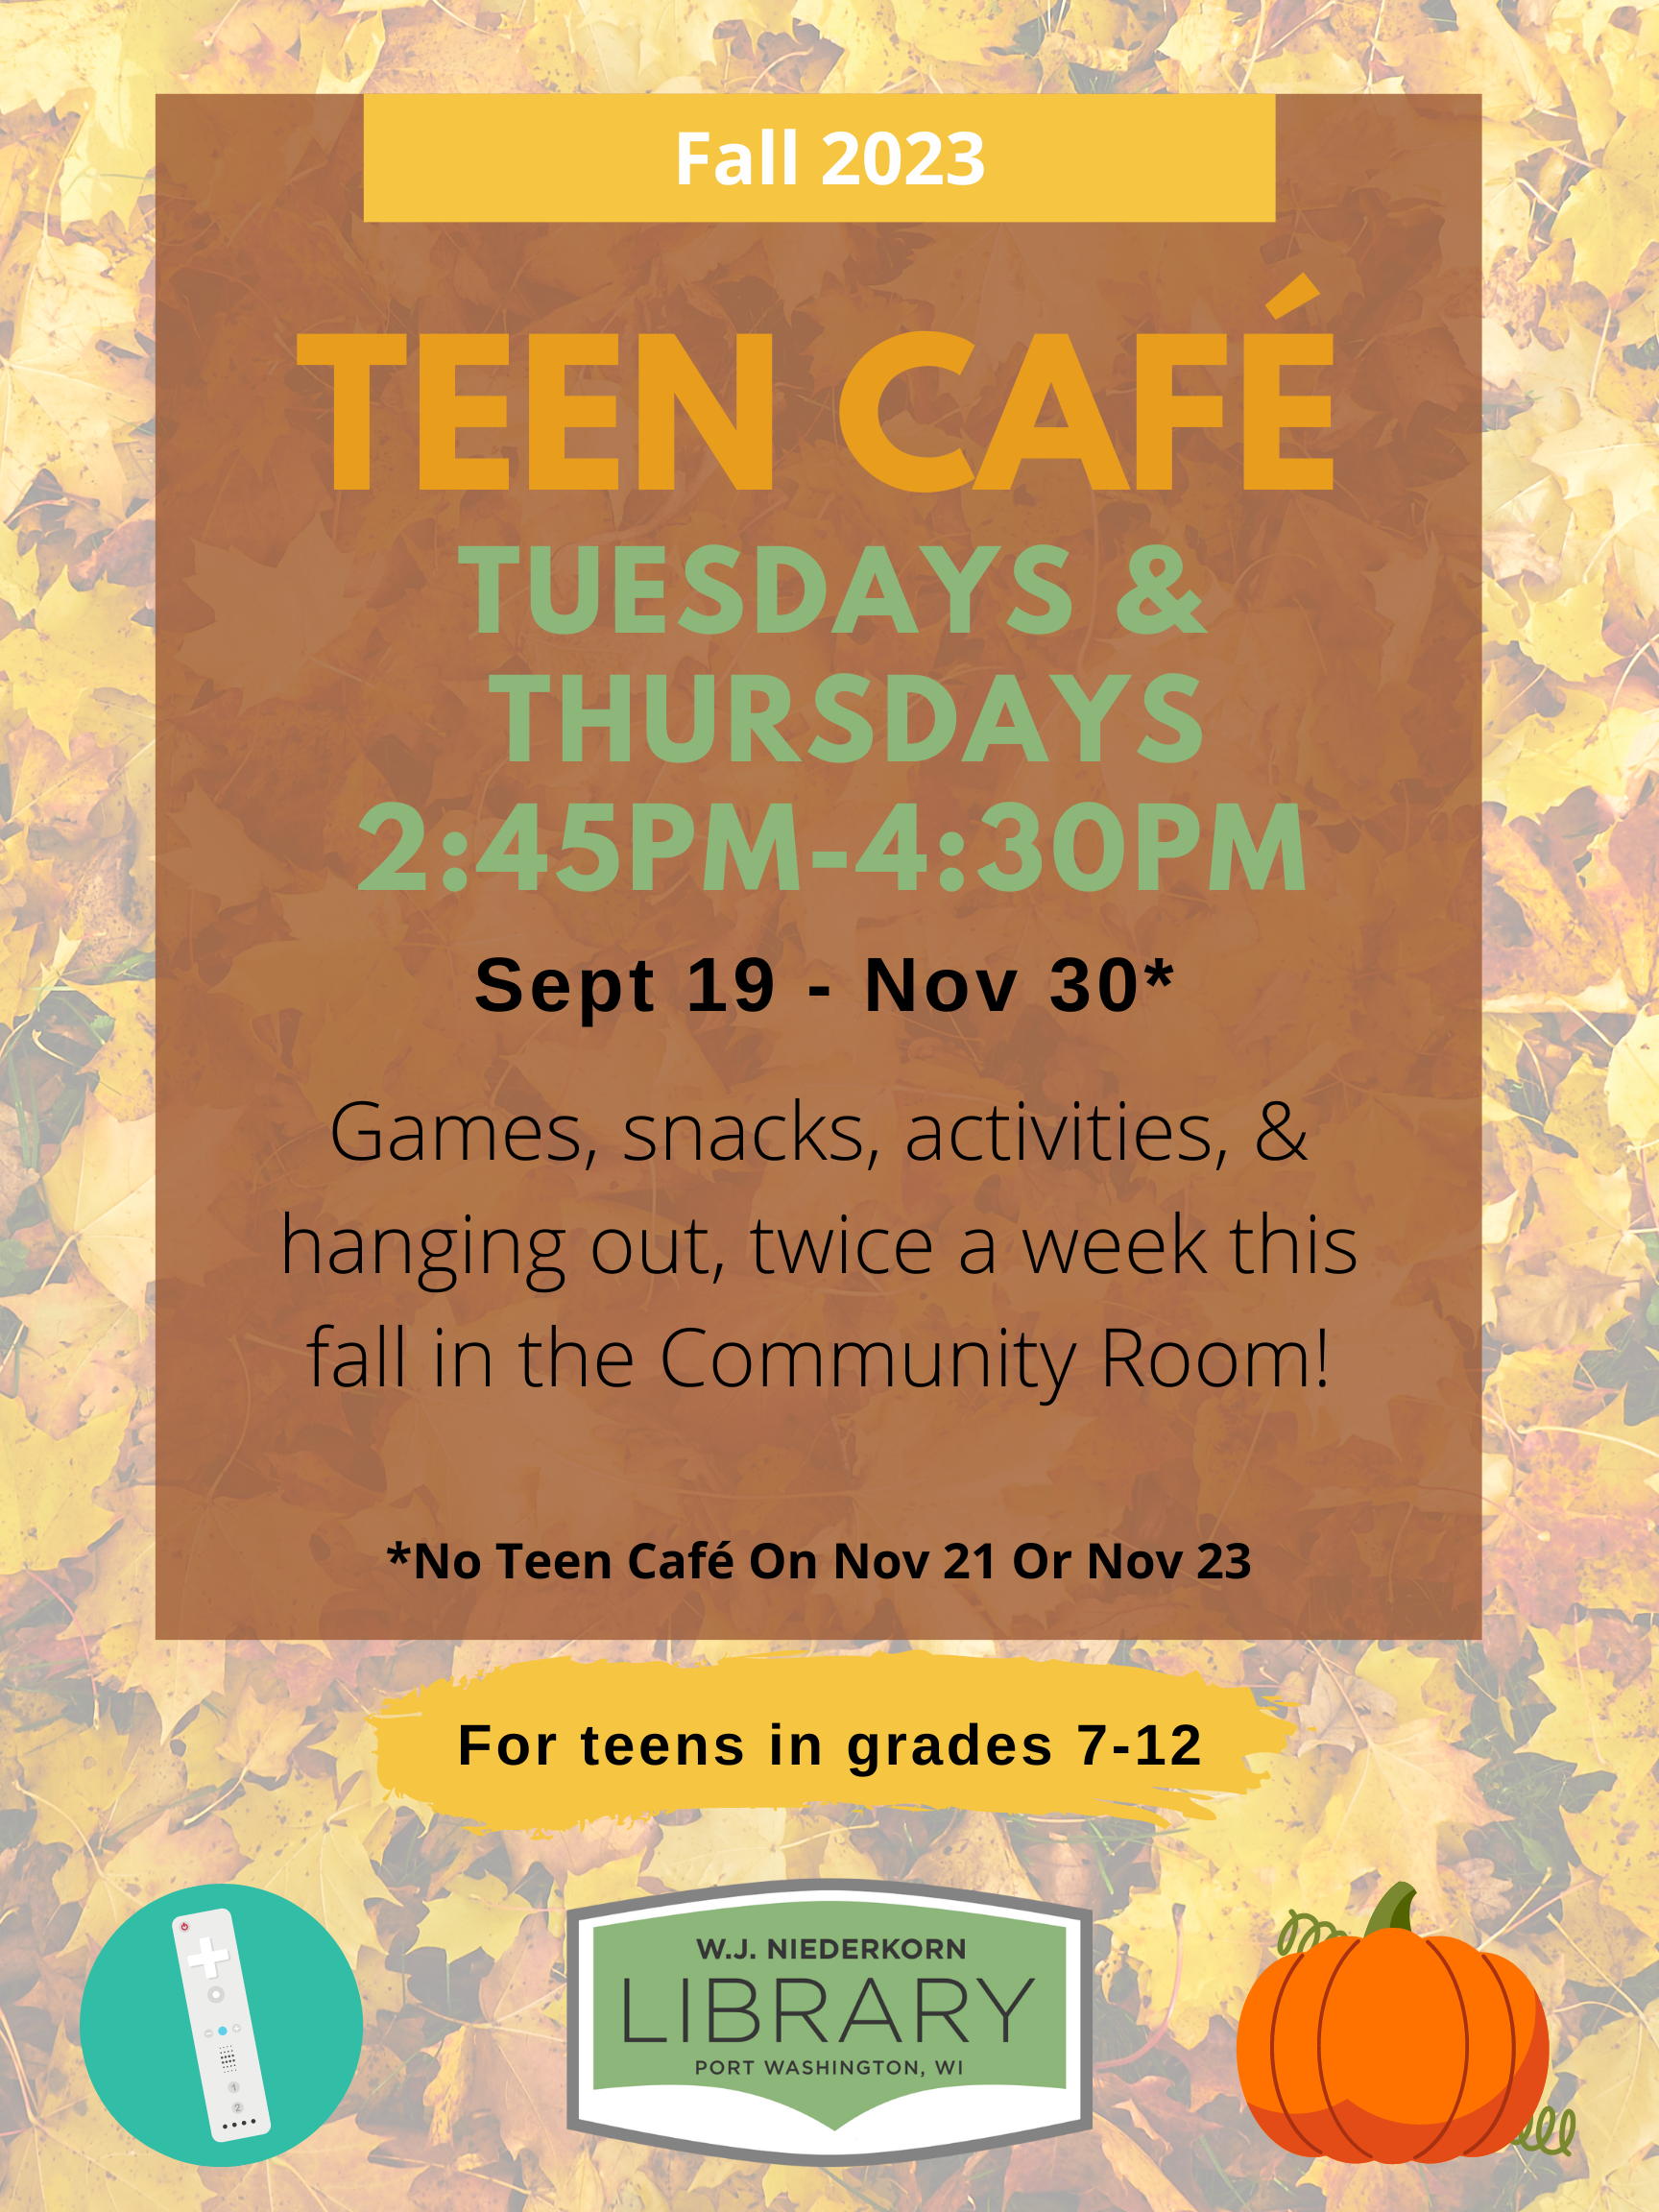 Fall 2023 Teen Cafe flyer